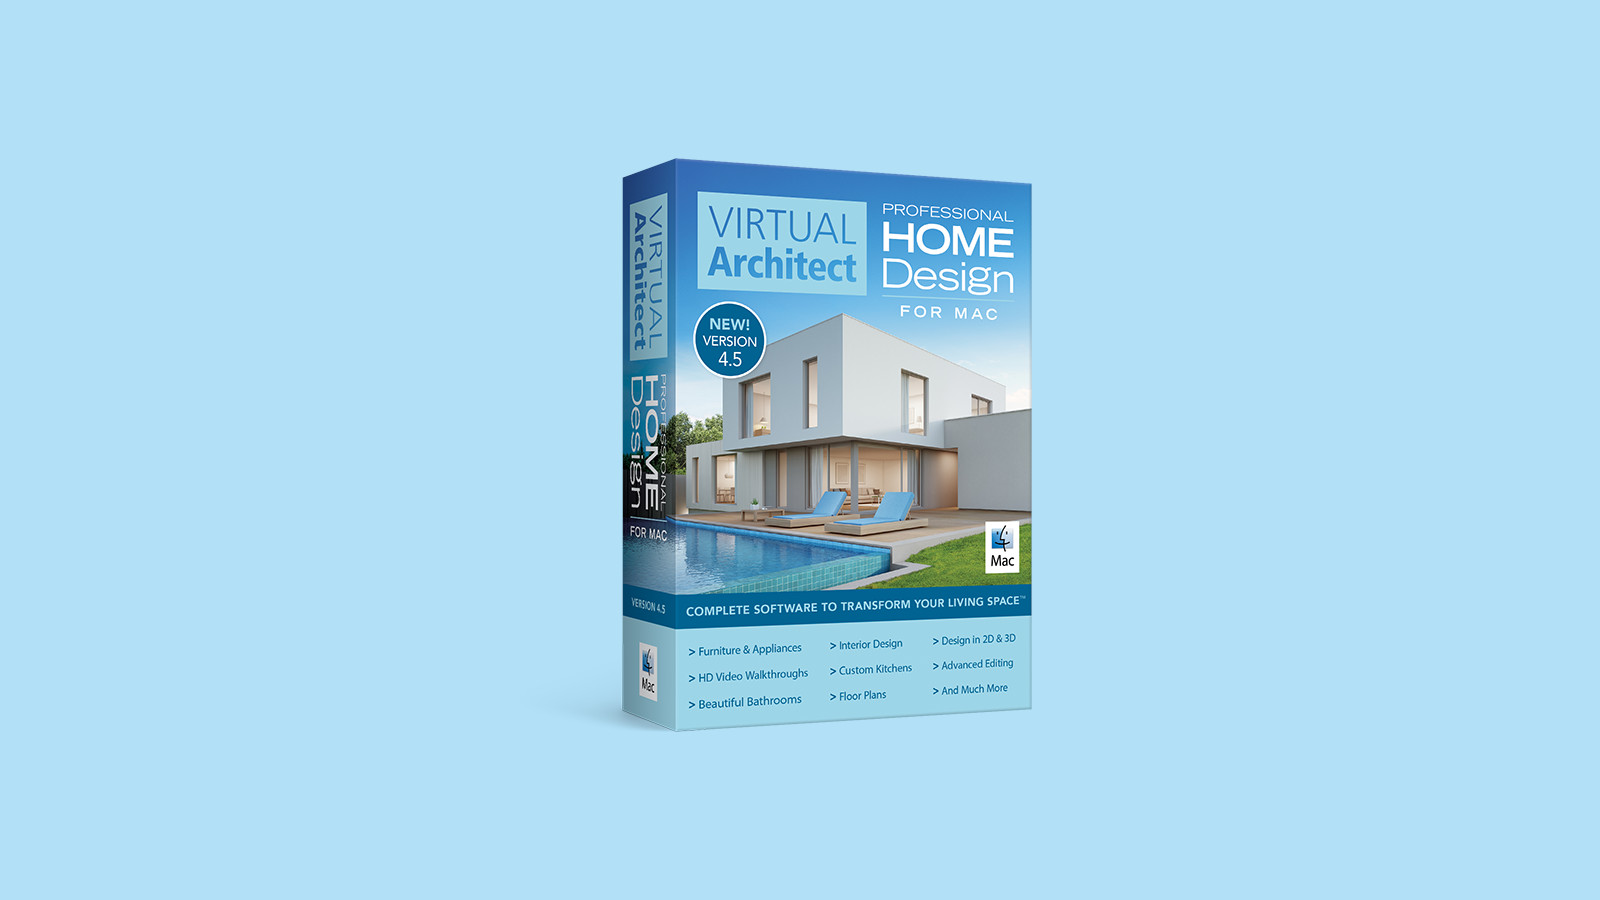 Virtual Architect Professional Home Design for Mac CD Key, $64.8